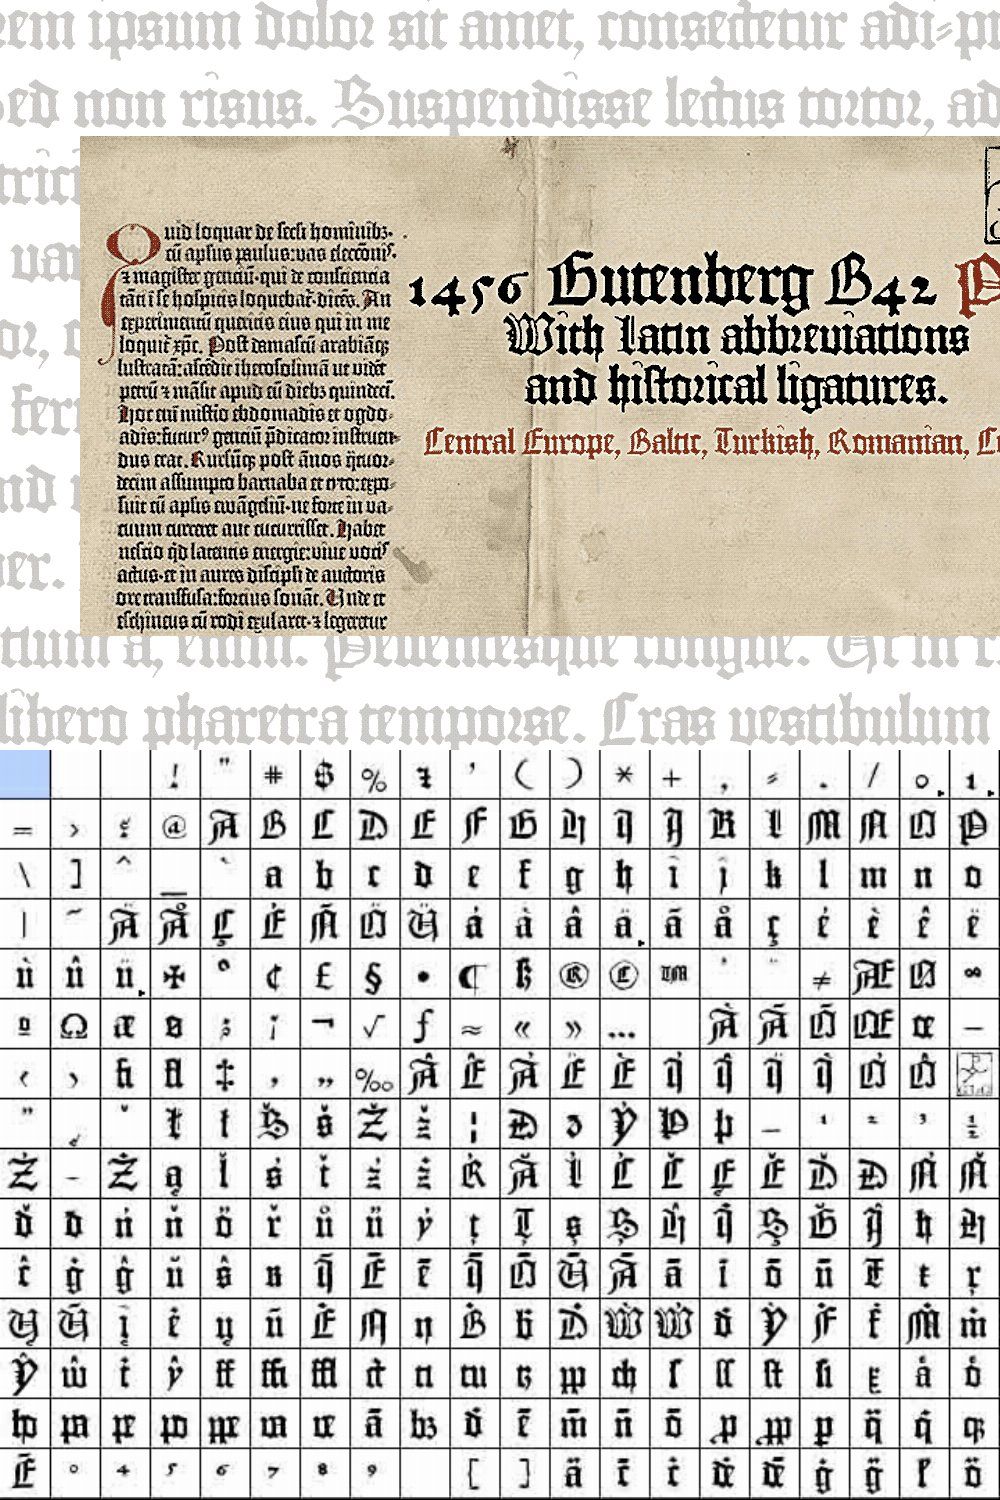 1456 GLC Gutenberg B42 PRO pinterest preview image.